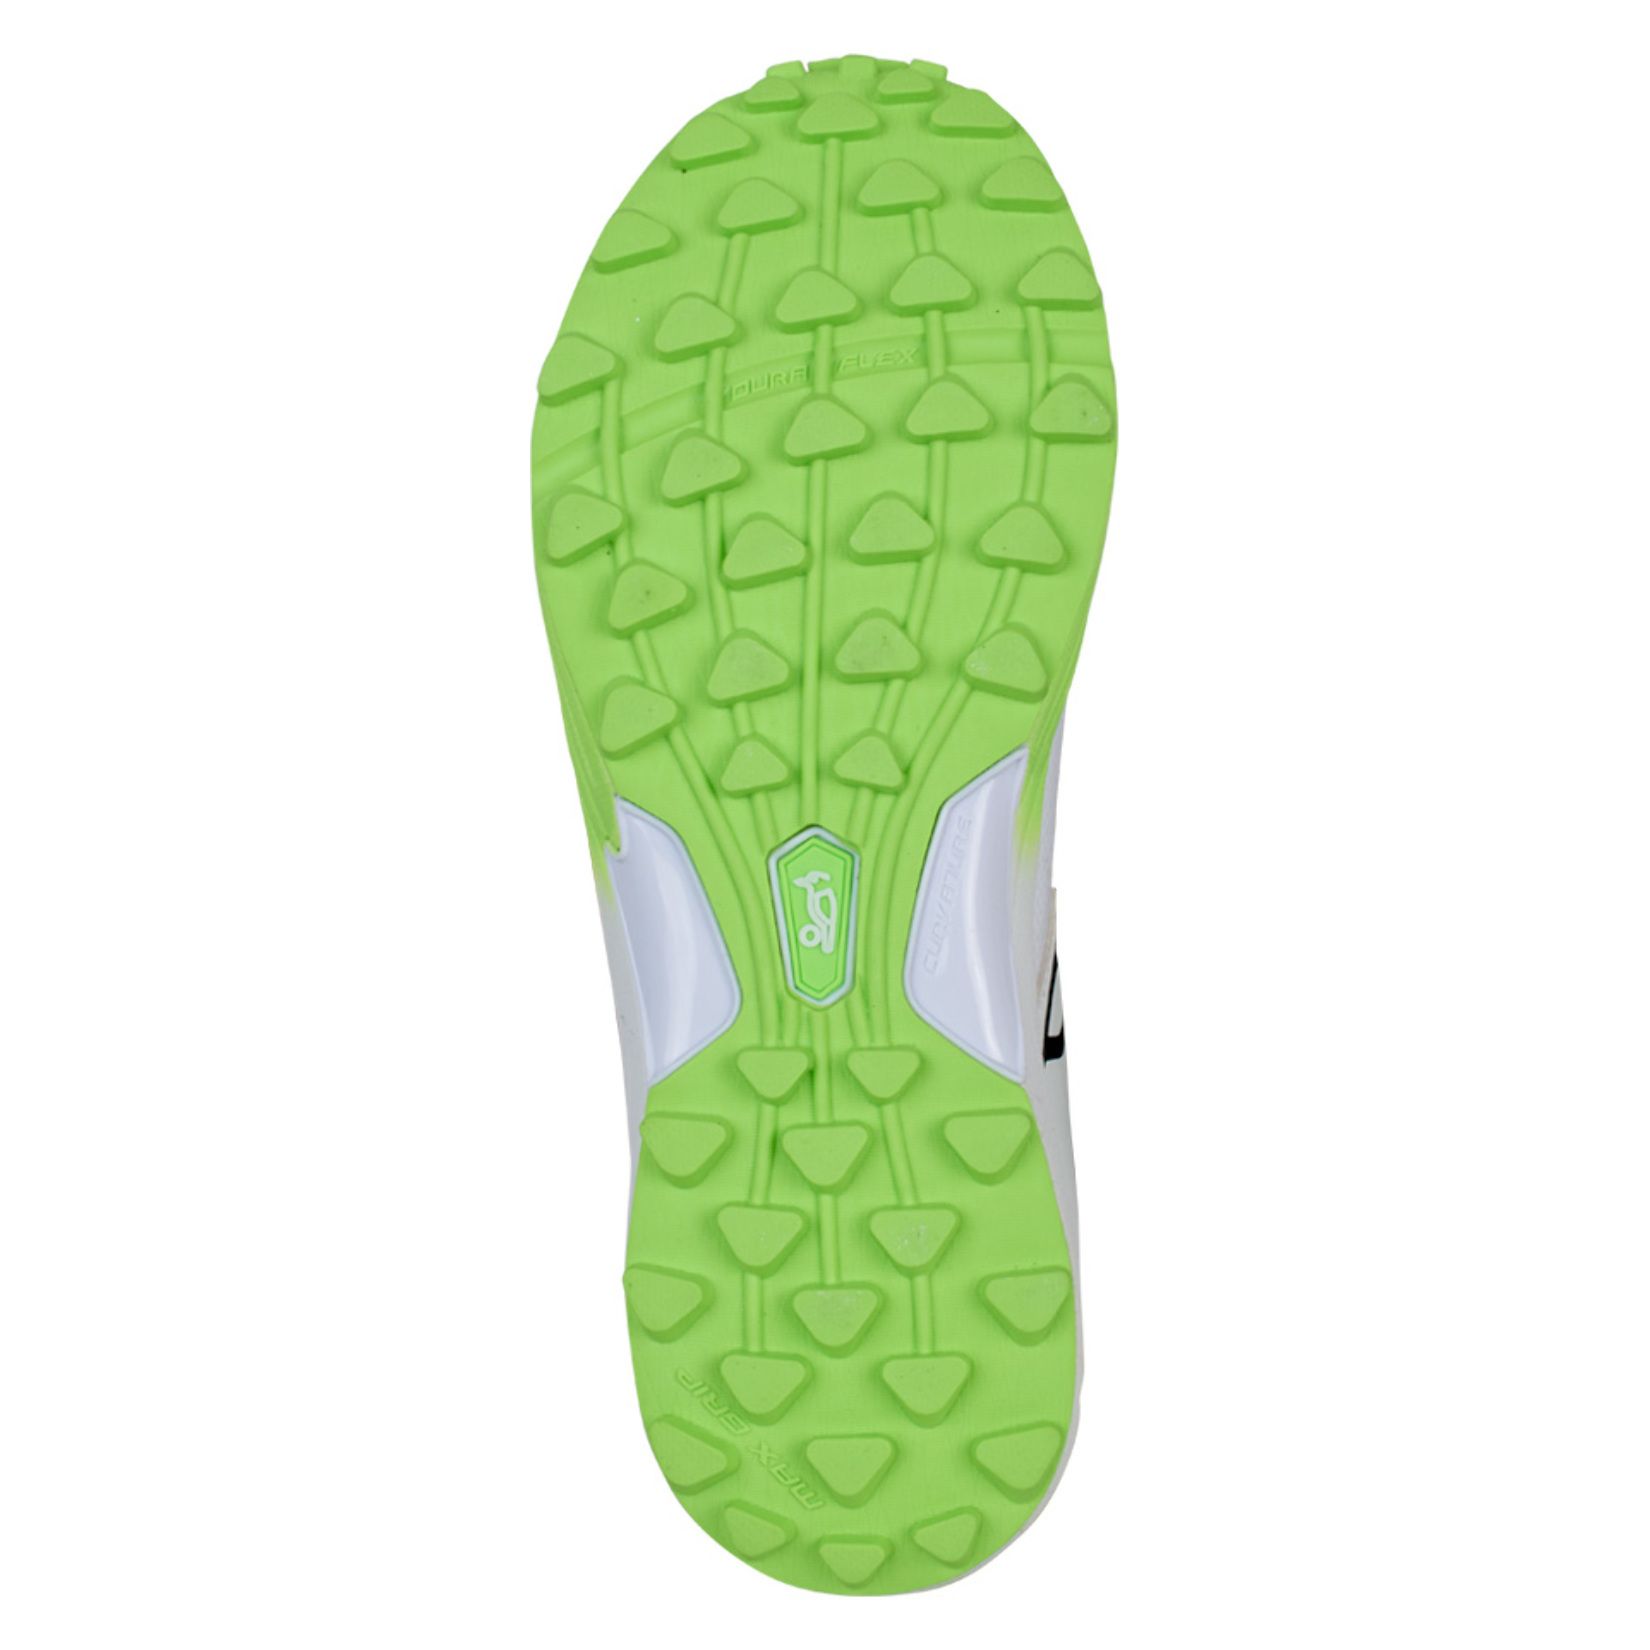 Kookaburra Kc 2.0 Rubber Cricket Shoes